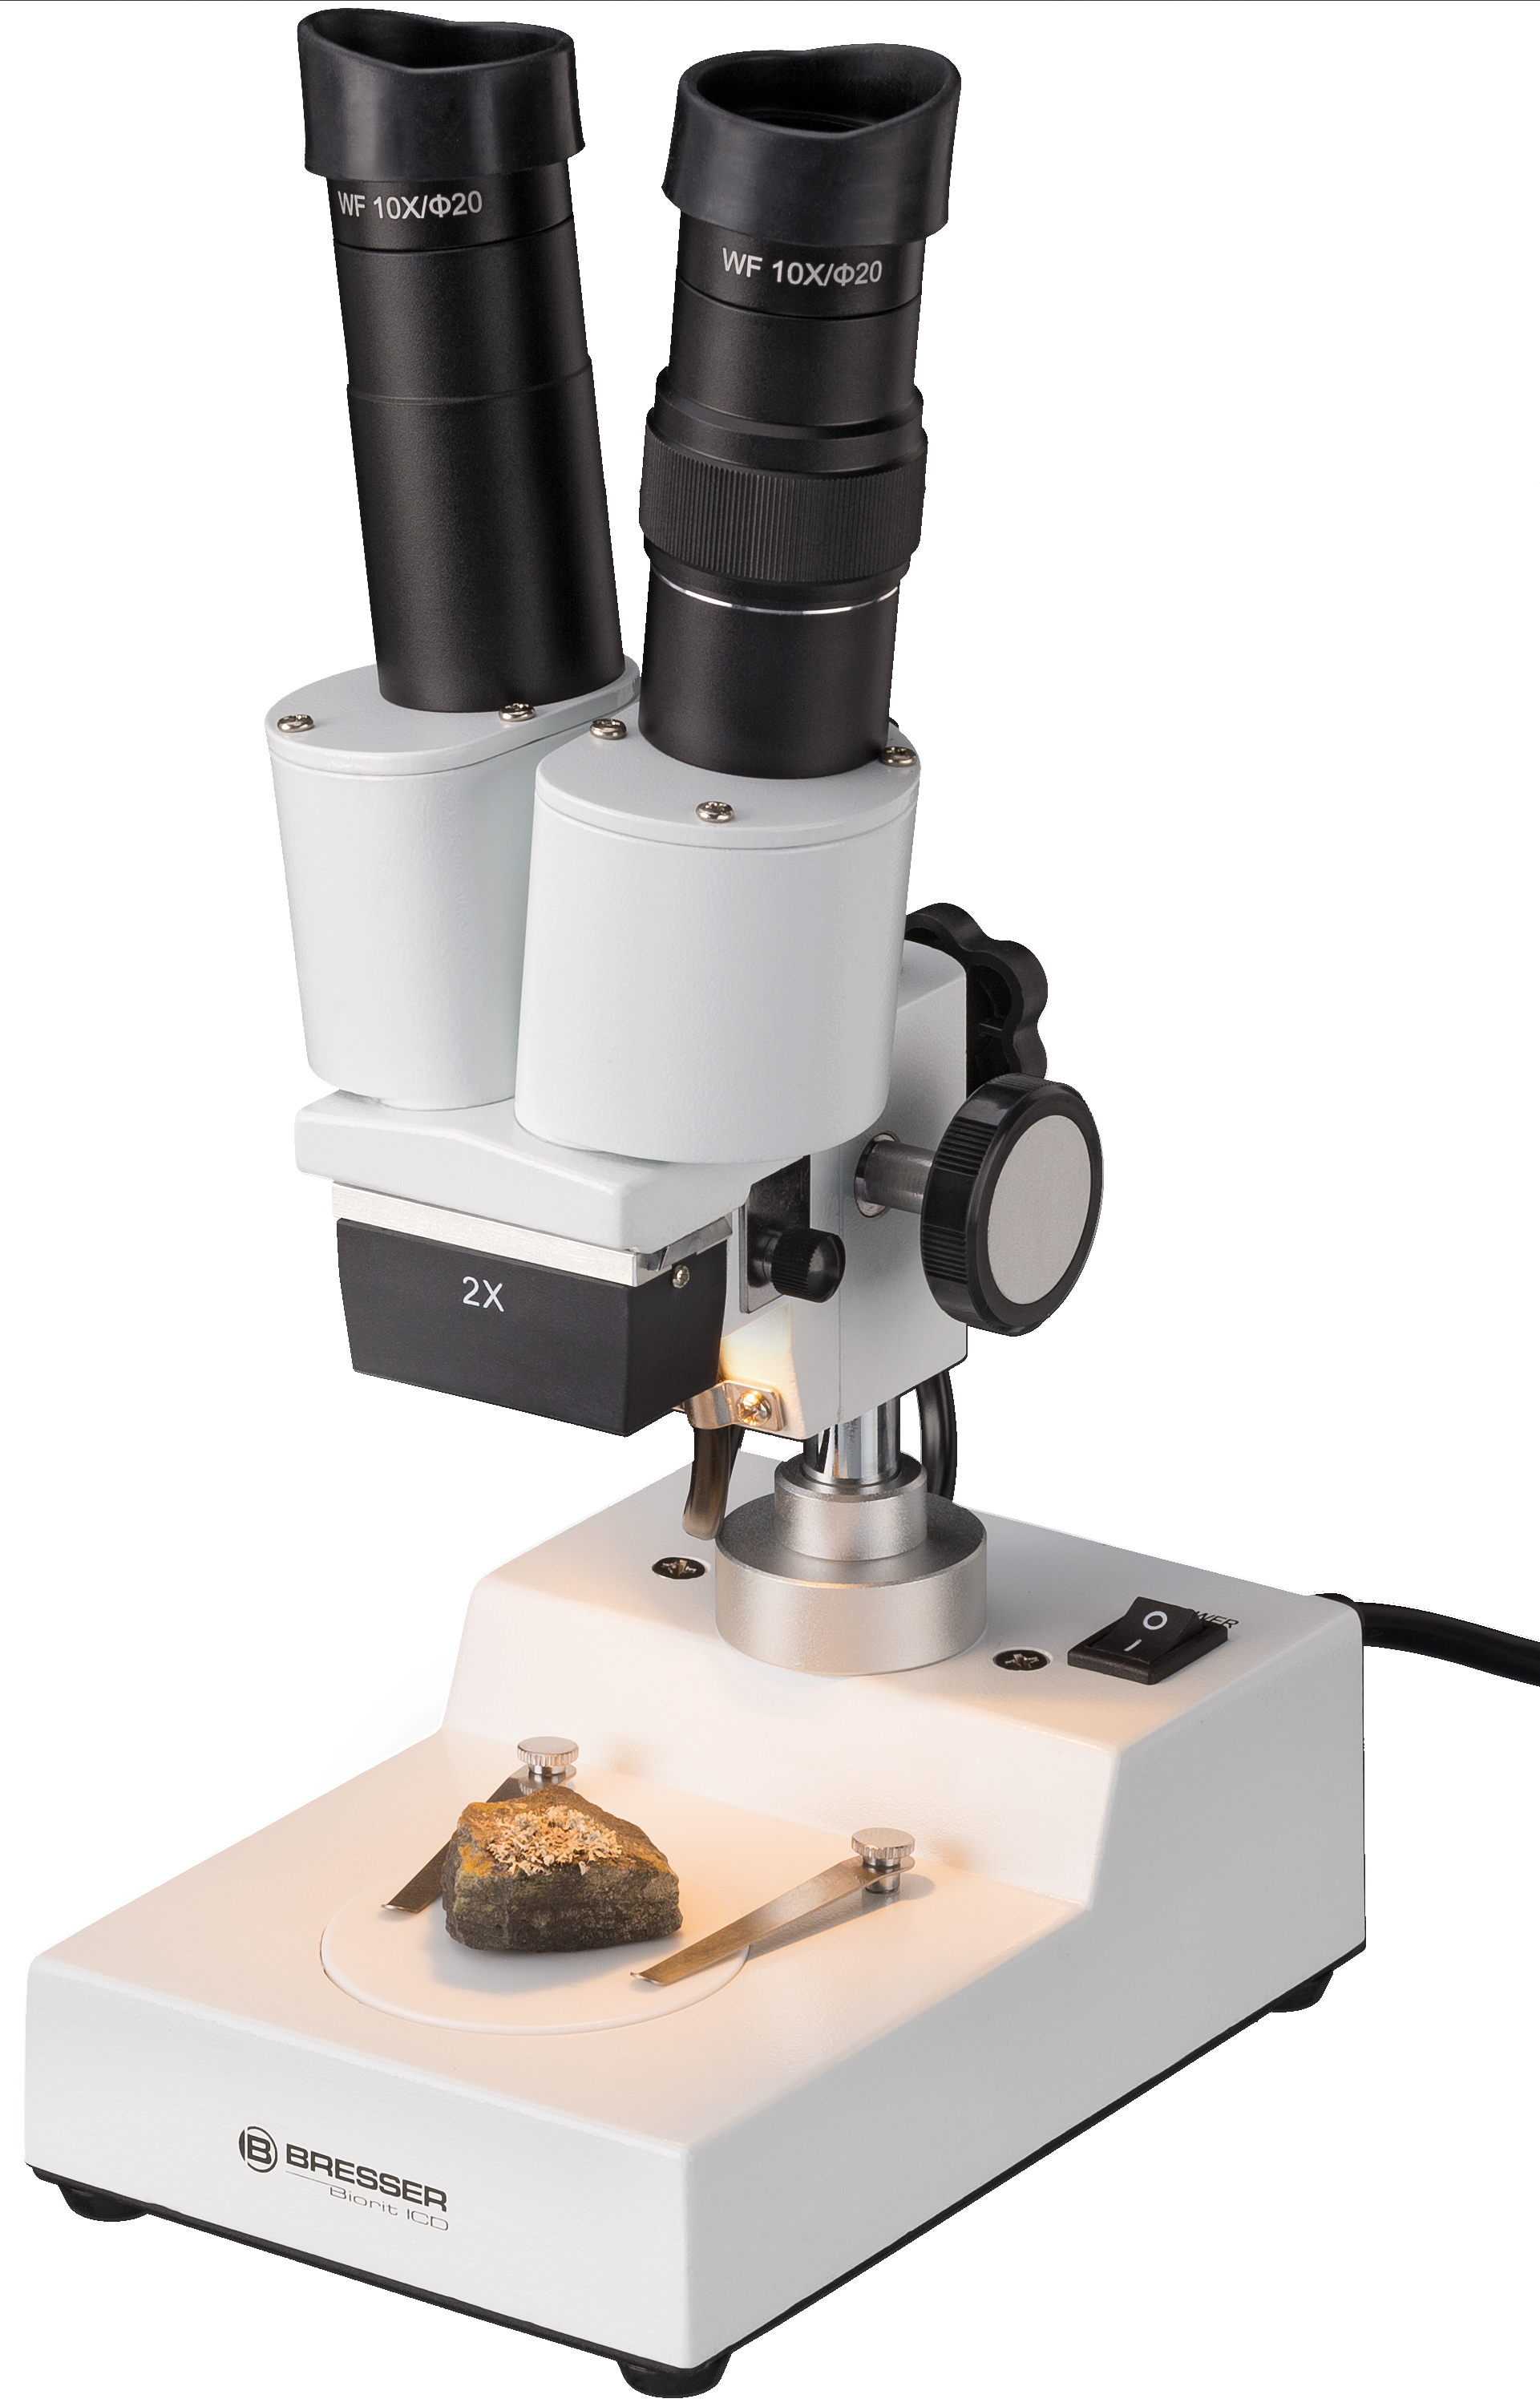 BRESSER Biorit ICD 20x Stereo Microscope